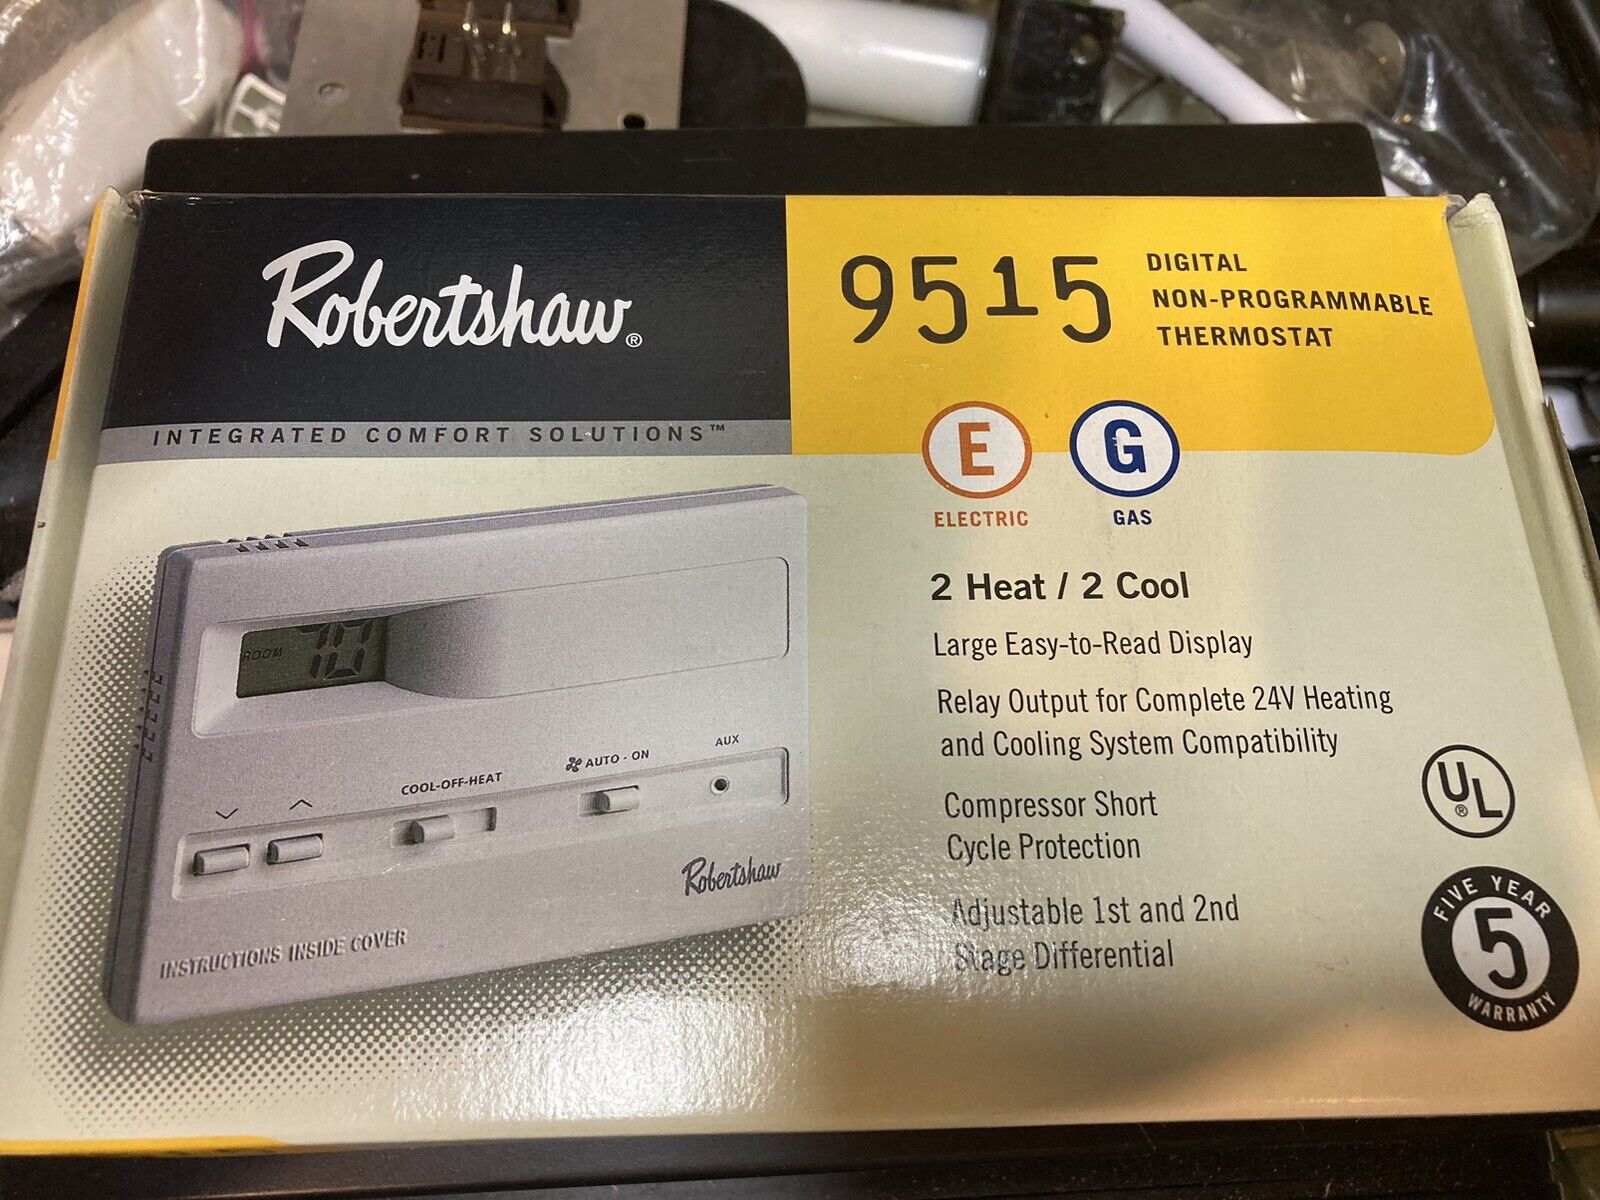 robertshaw 9515 digital non-programable thermostat new